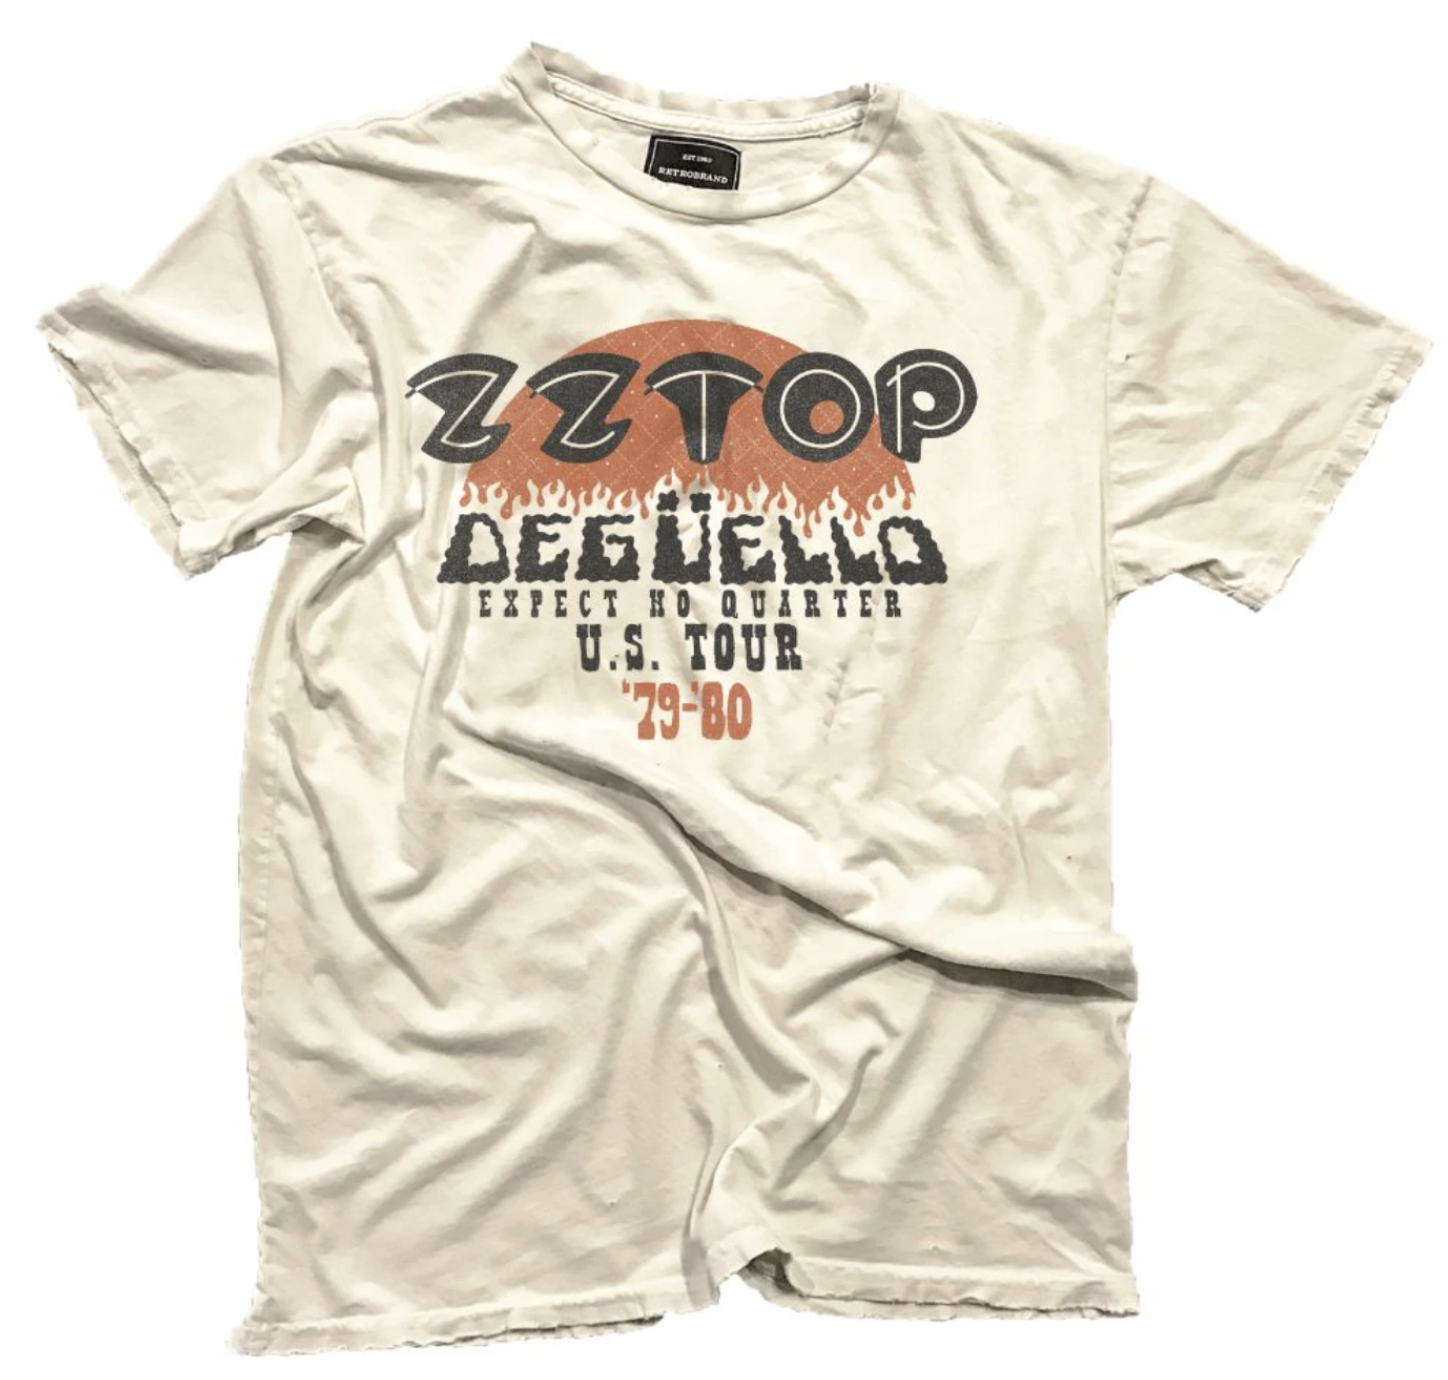 ZZ Top '79-'80 U.S. Tour Black Label Tee